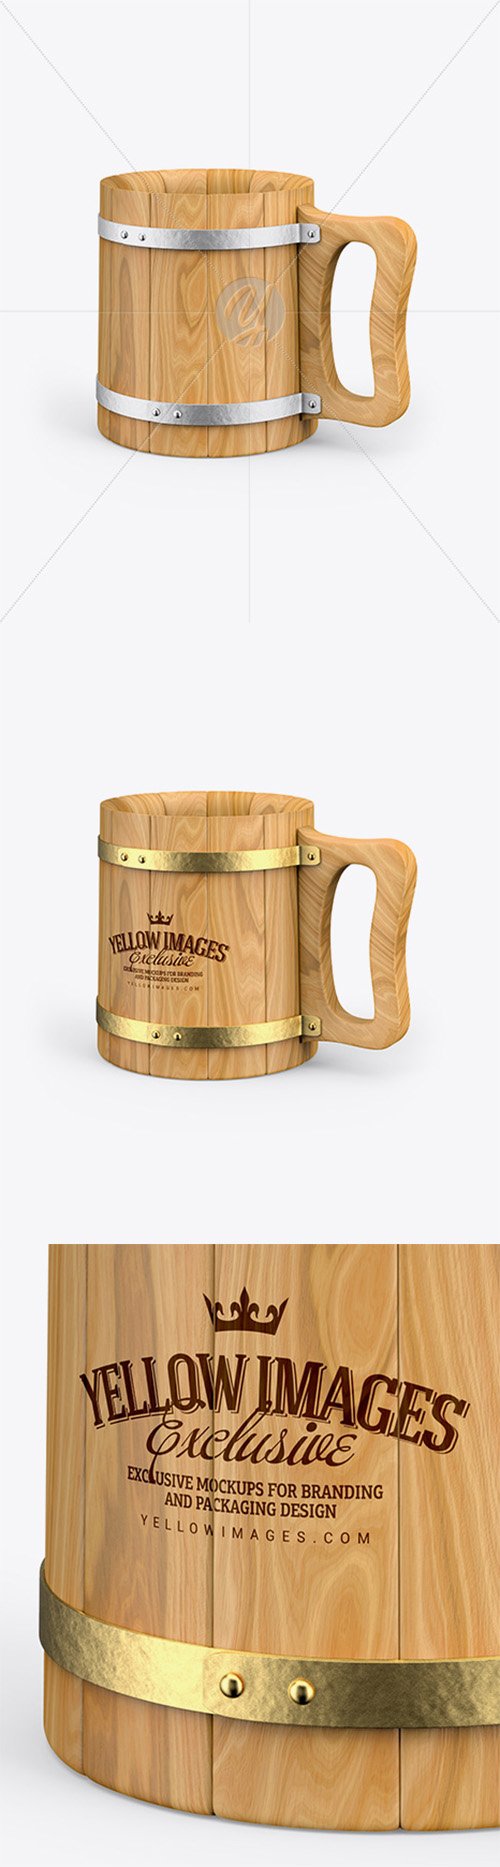 Wooden Mug Mockup 36364 TIF